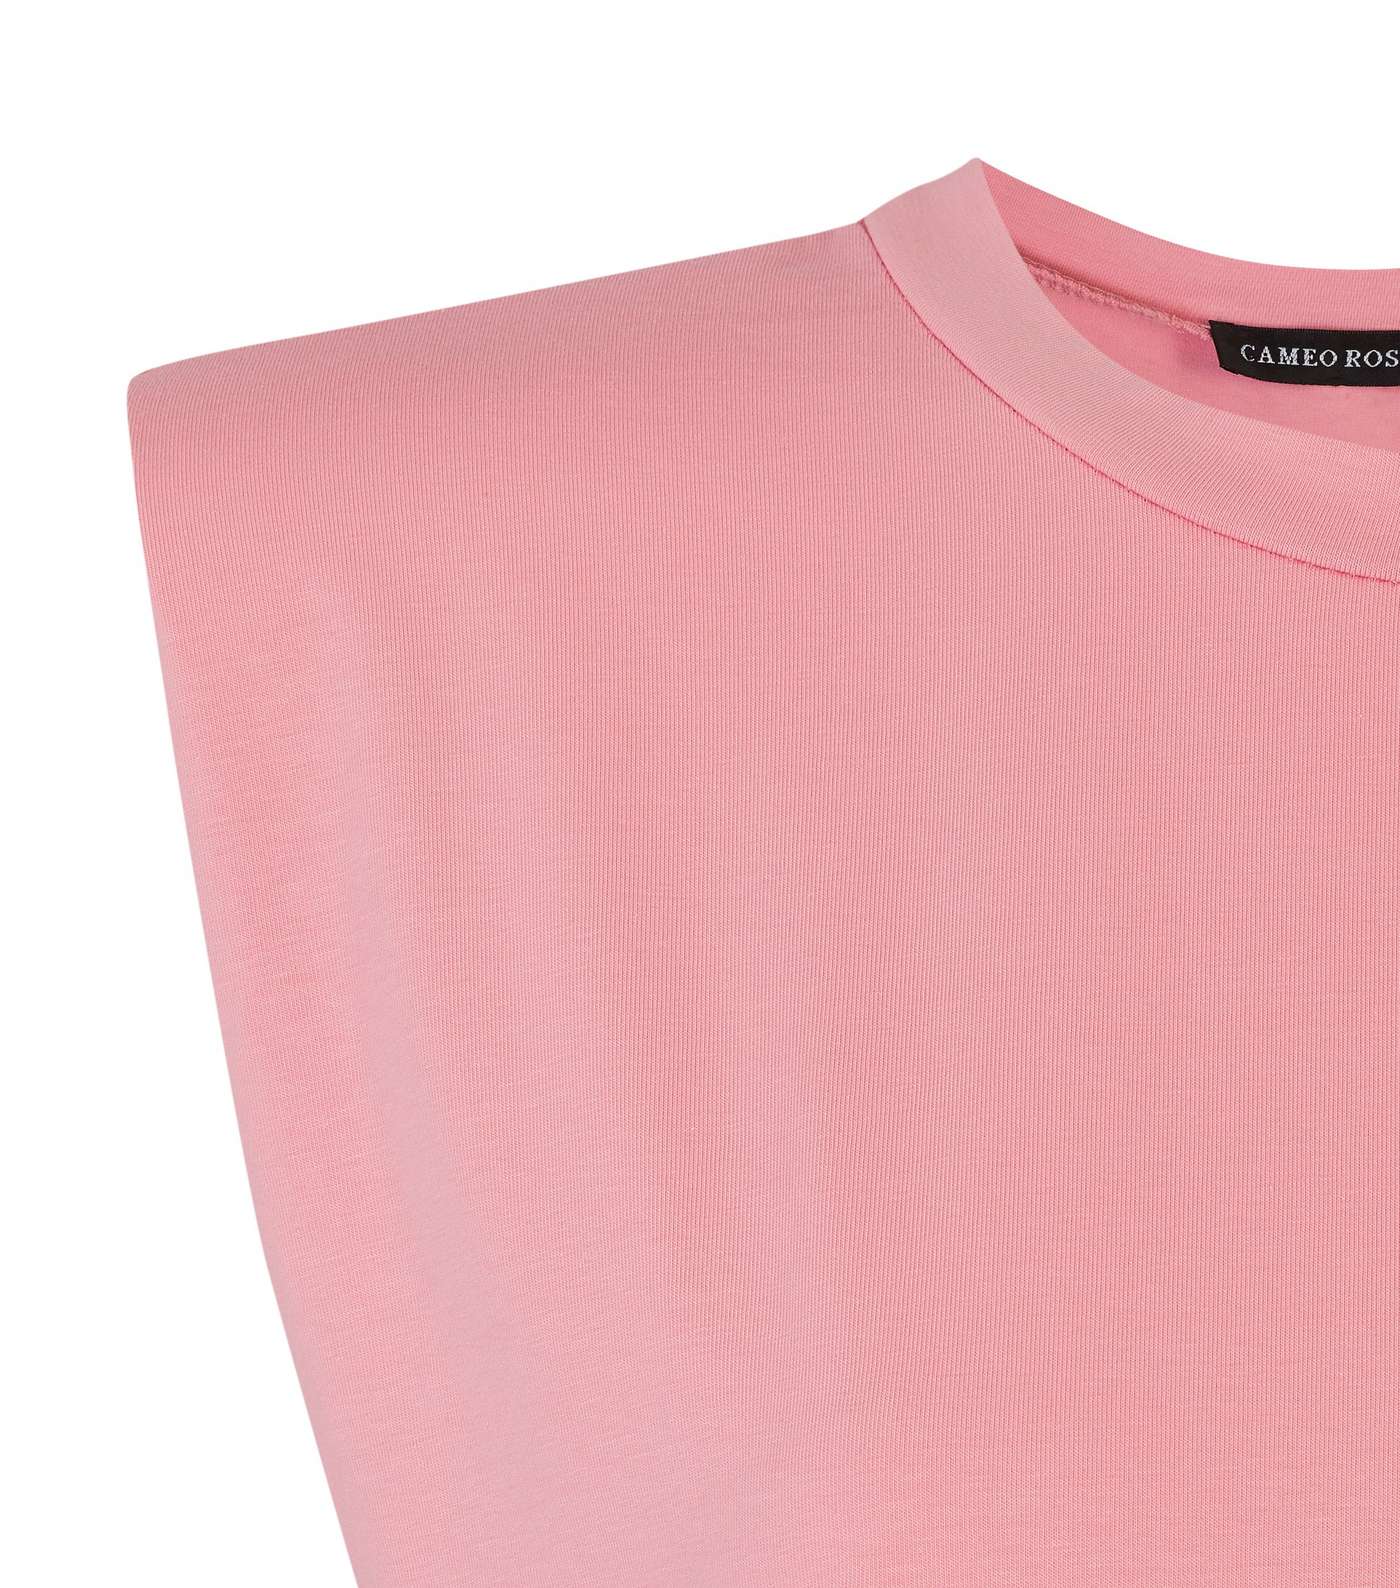 Cameo Rose Pink Shoulder Pad Sleeveless T-Shirt Image 3